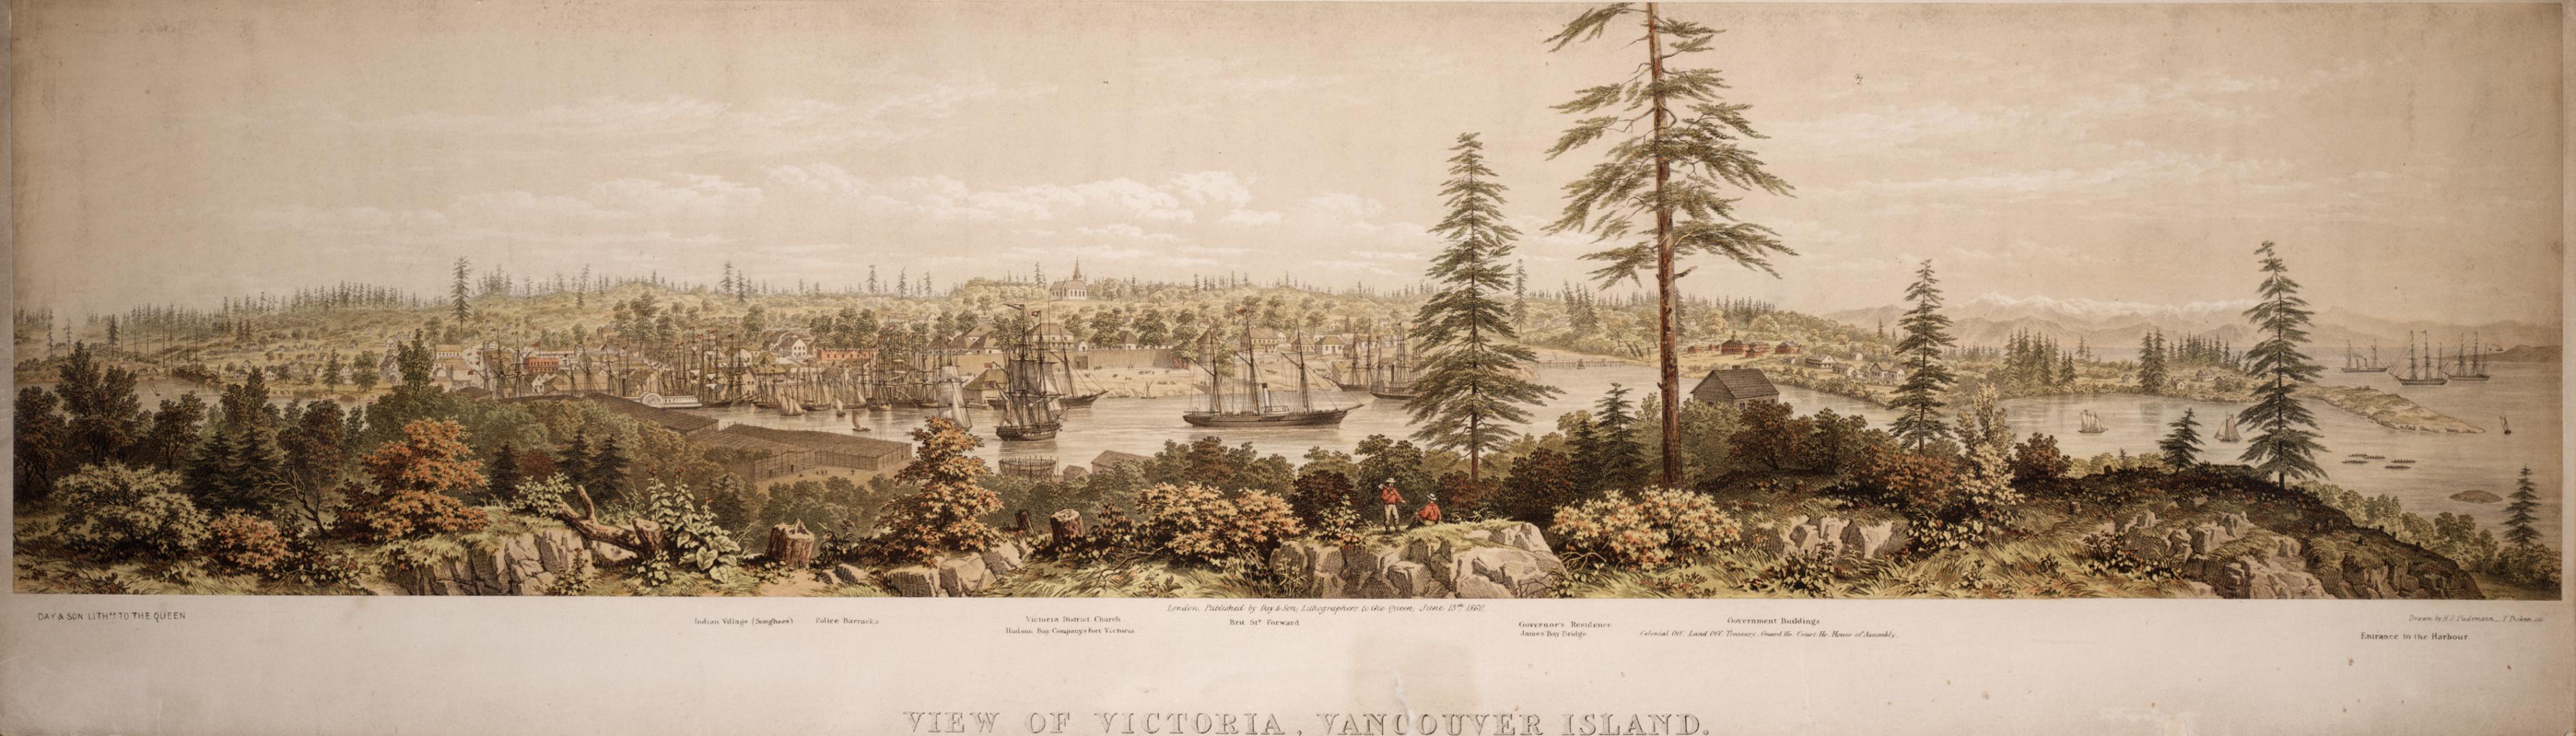 View of Victoria, Vancouver Island (British Columbia)